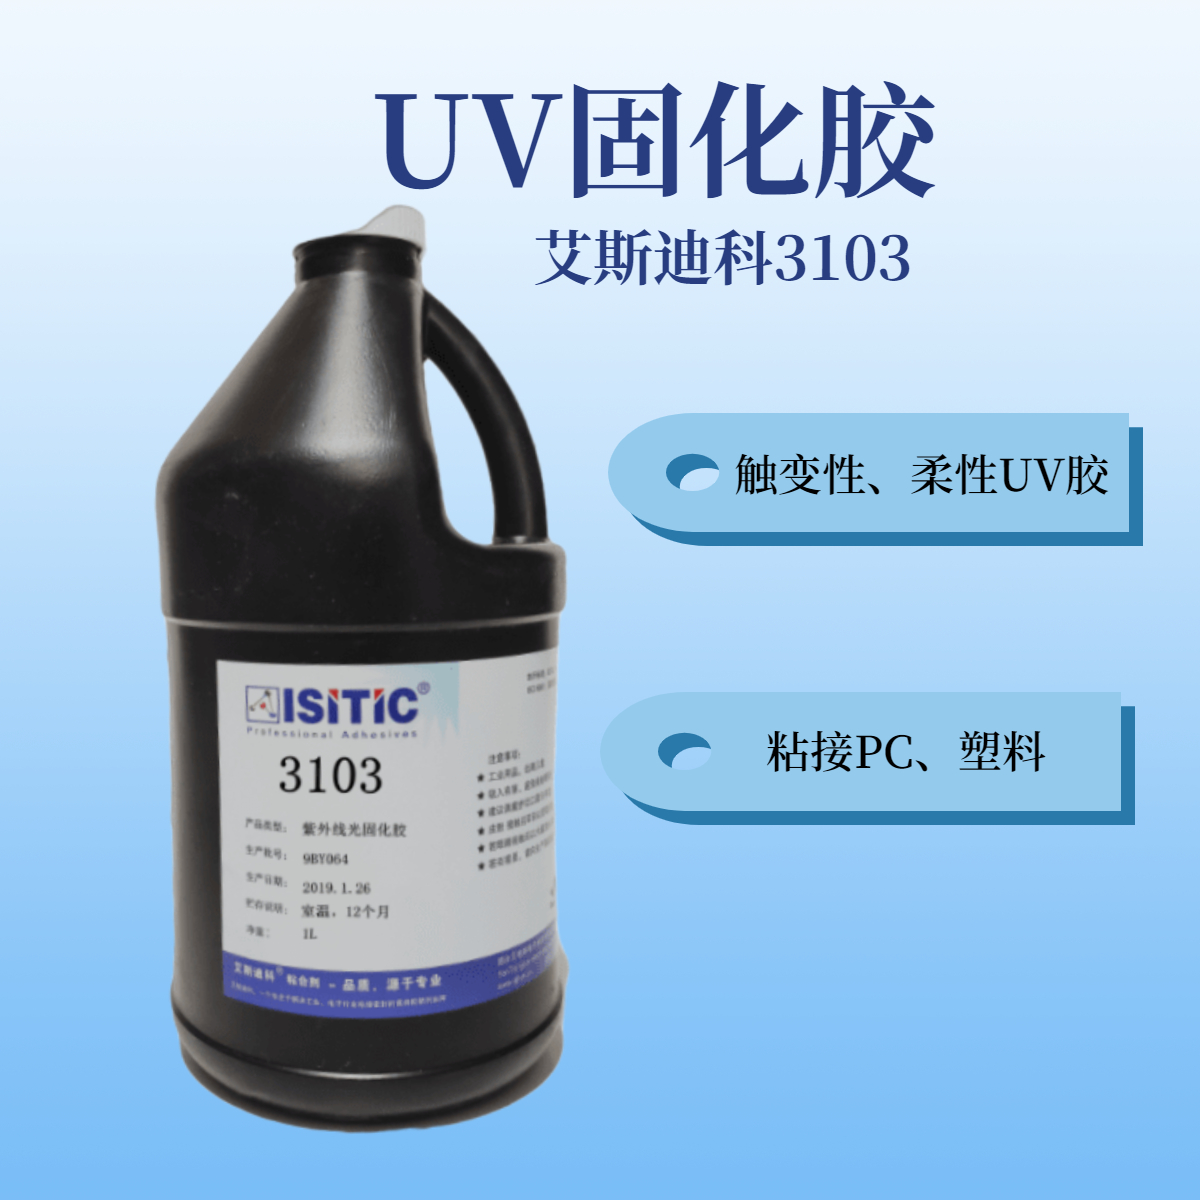 UV固化胶3103